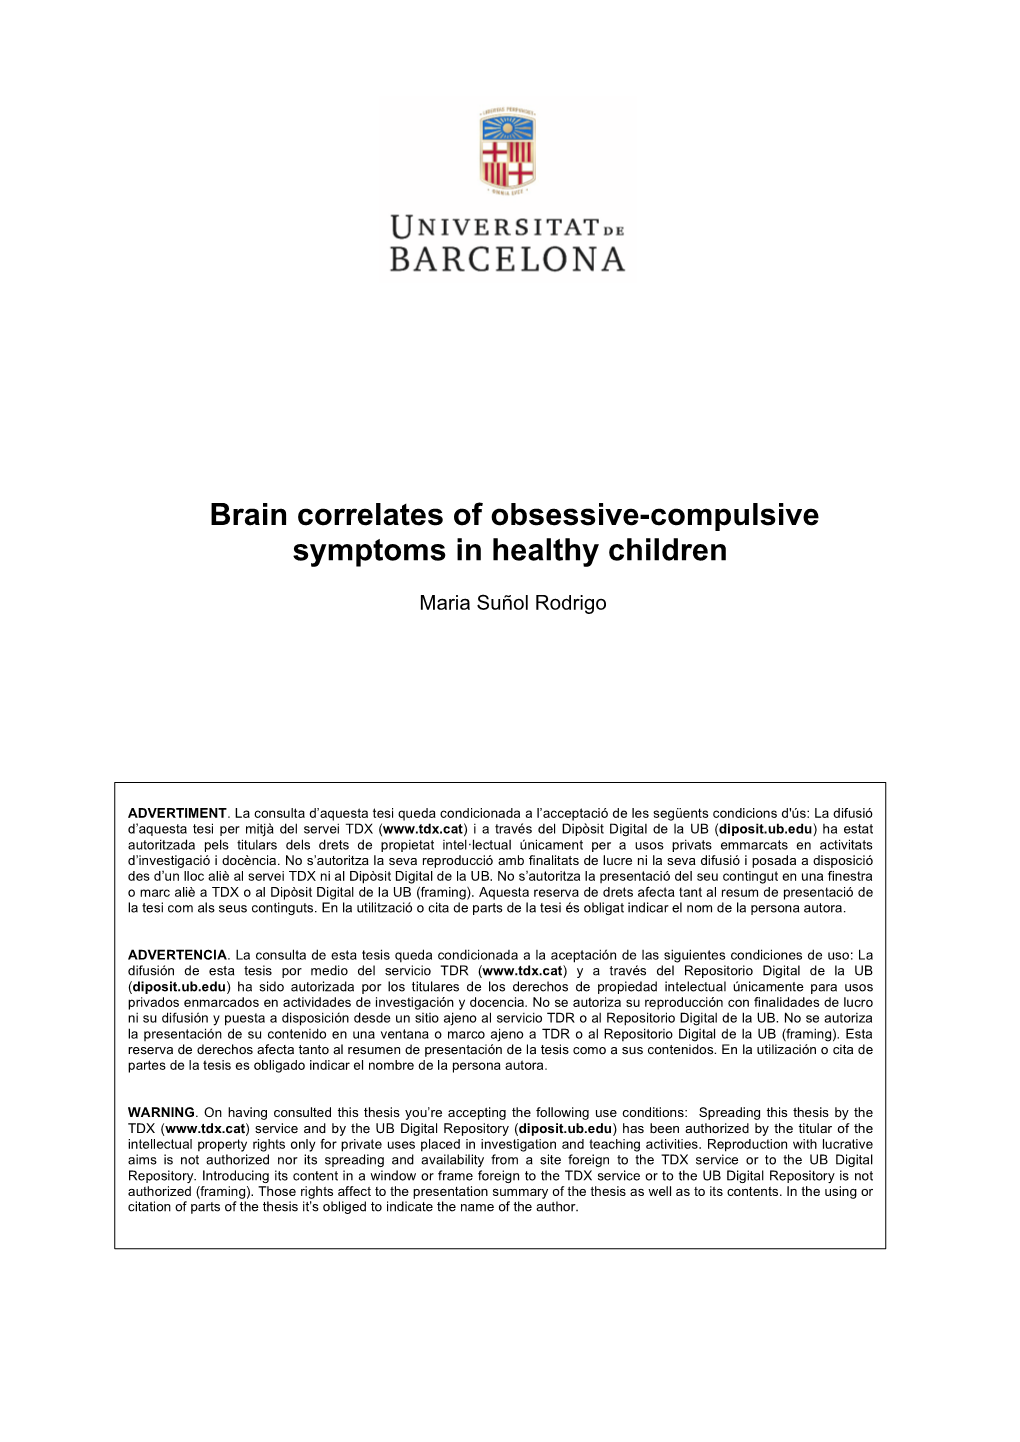 Brain Correlates of Obsessive-Compulsive Symptoms in Healthy Children